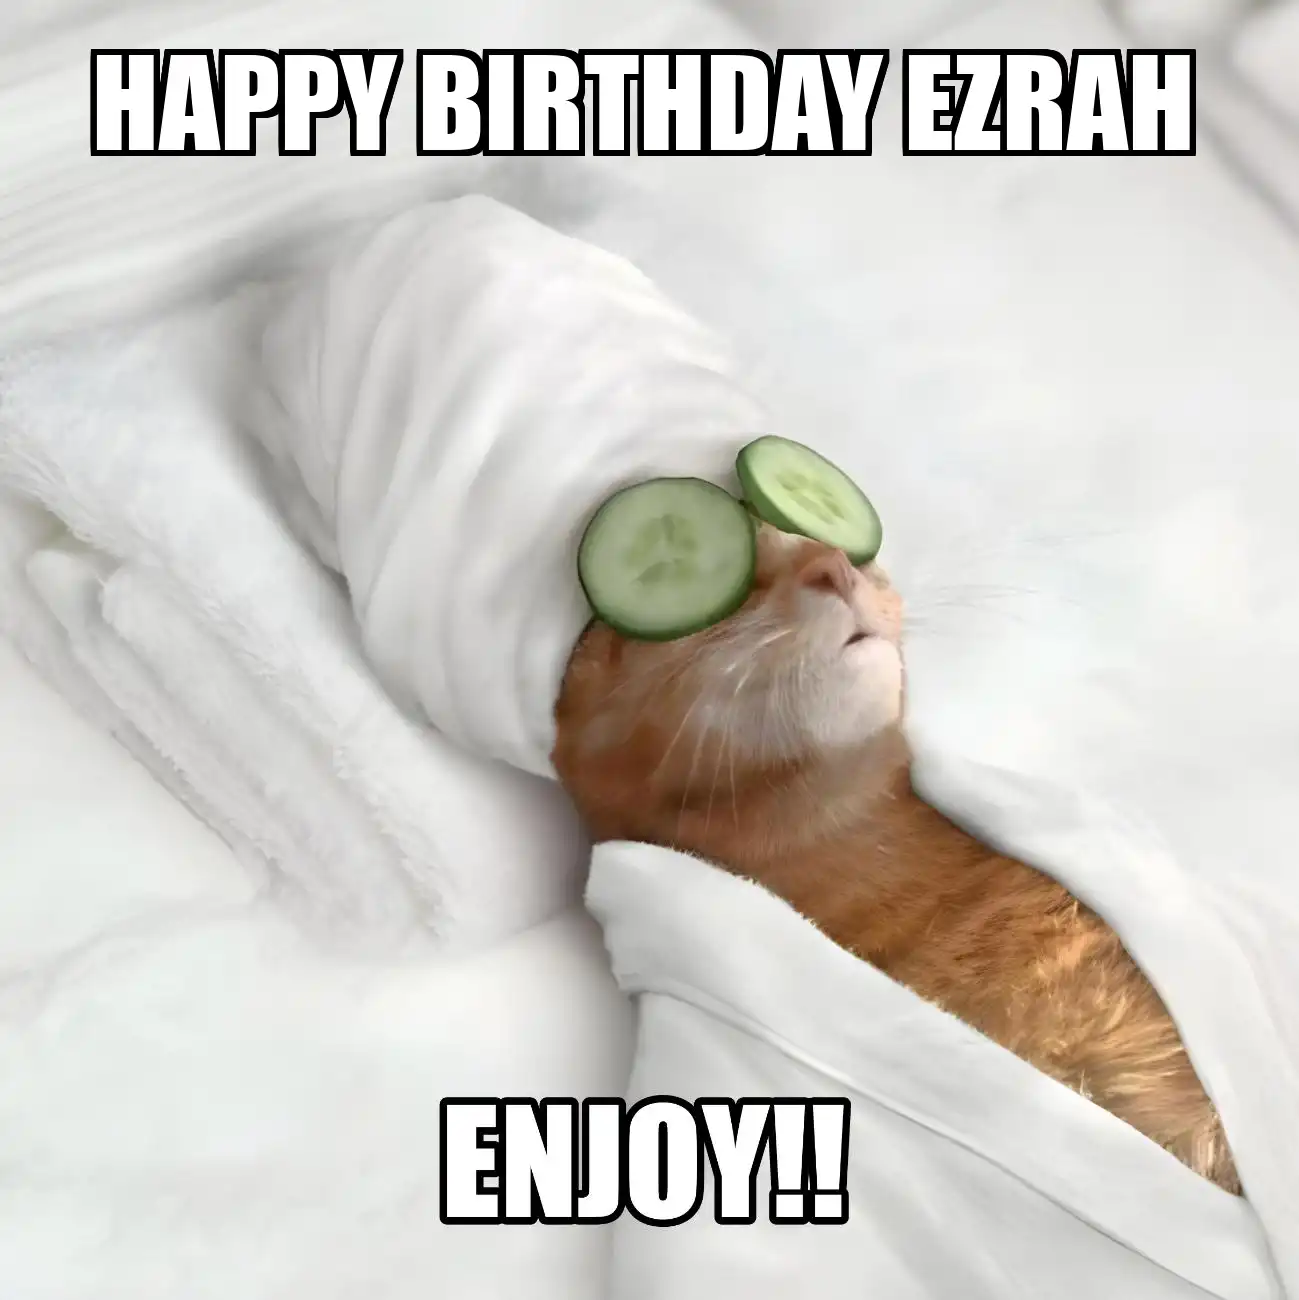 Happy Birthday Ezrah Enjoy Cat Meme